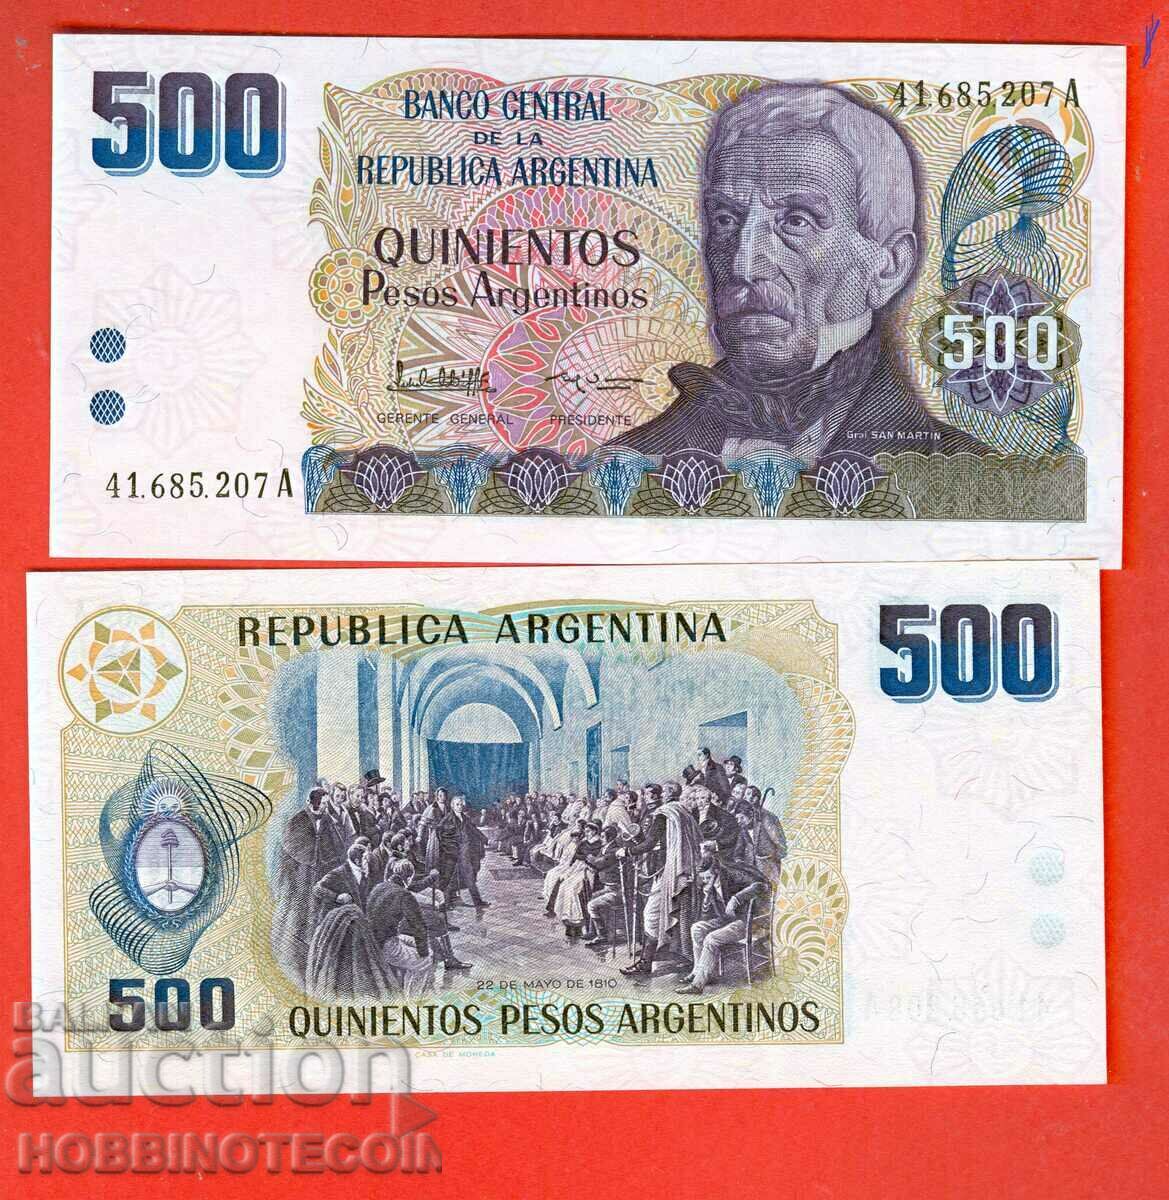 АРЖЕНТИНА ARGENTINA 500 Песо емисия - issue 1985 НОВА UNC